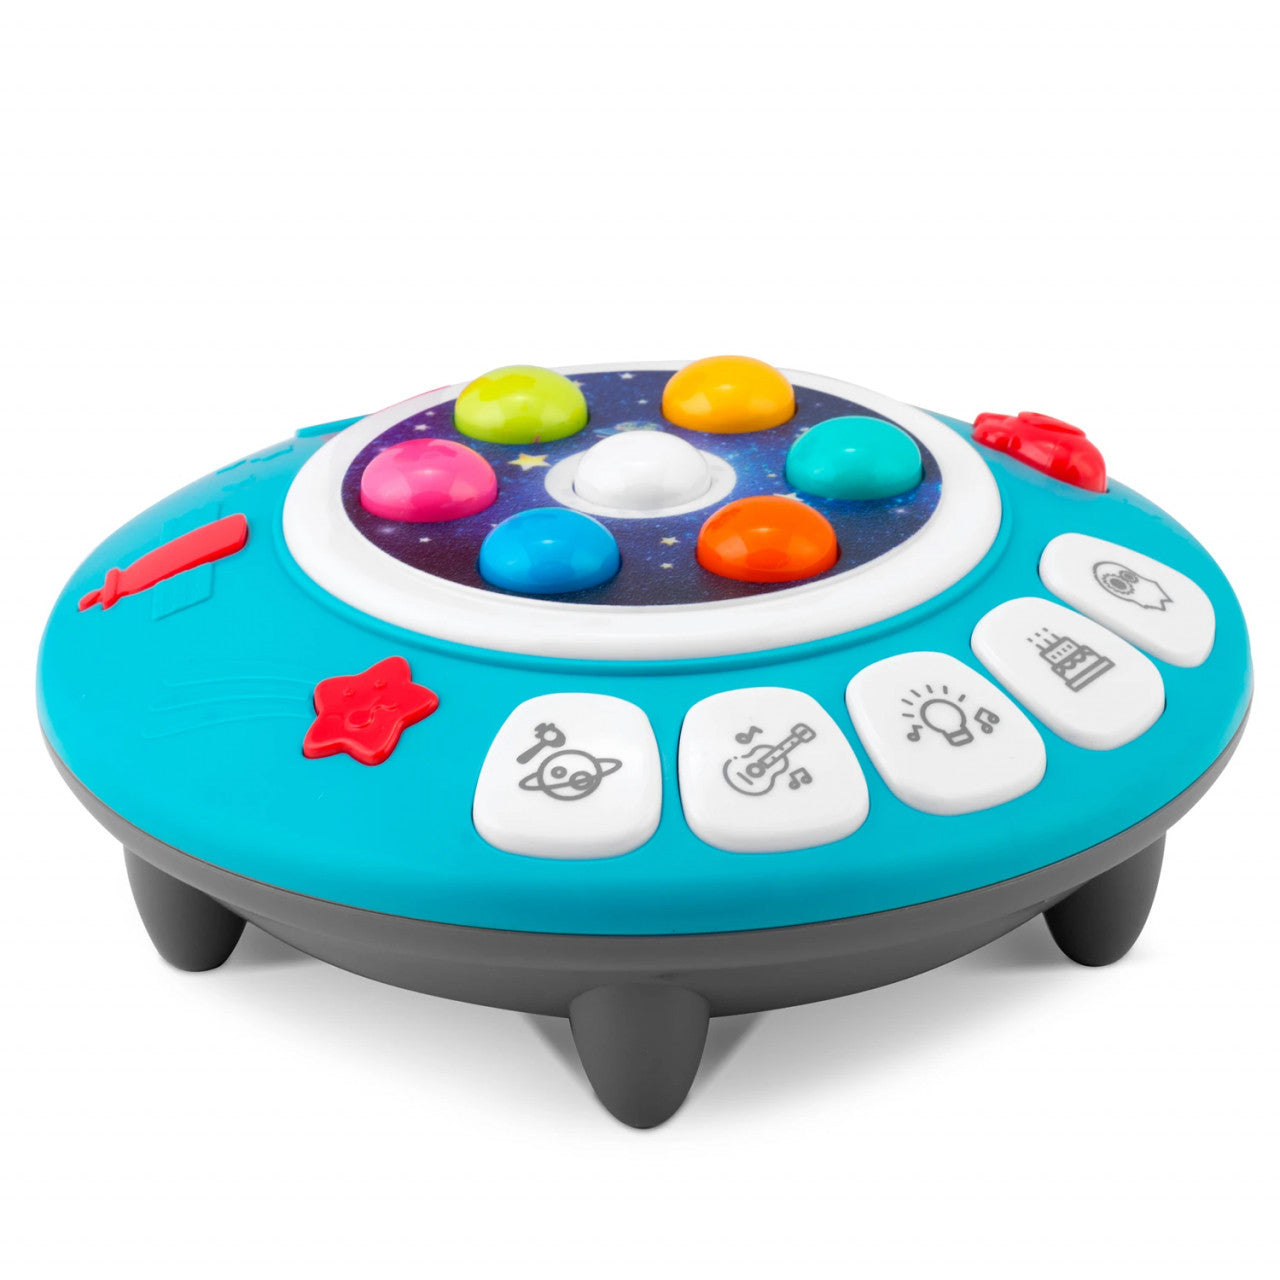 Jucarie interactiva pentru copii, cu suntete si lumini, Ricokids, RK-753, Arcade Cosmos